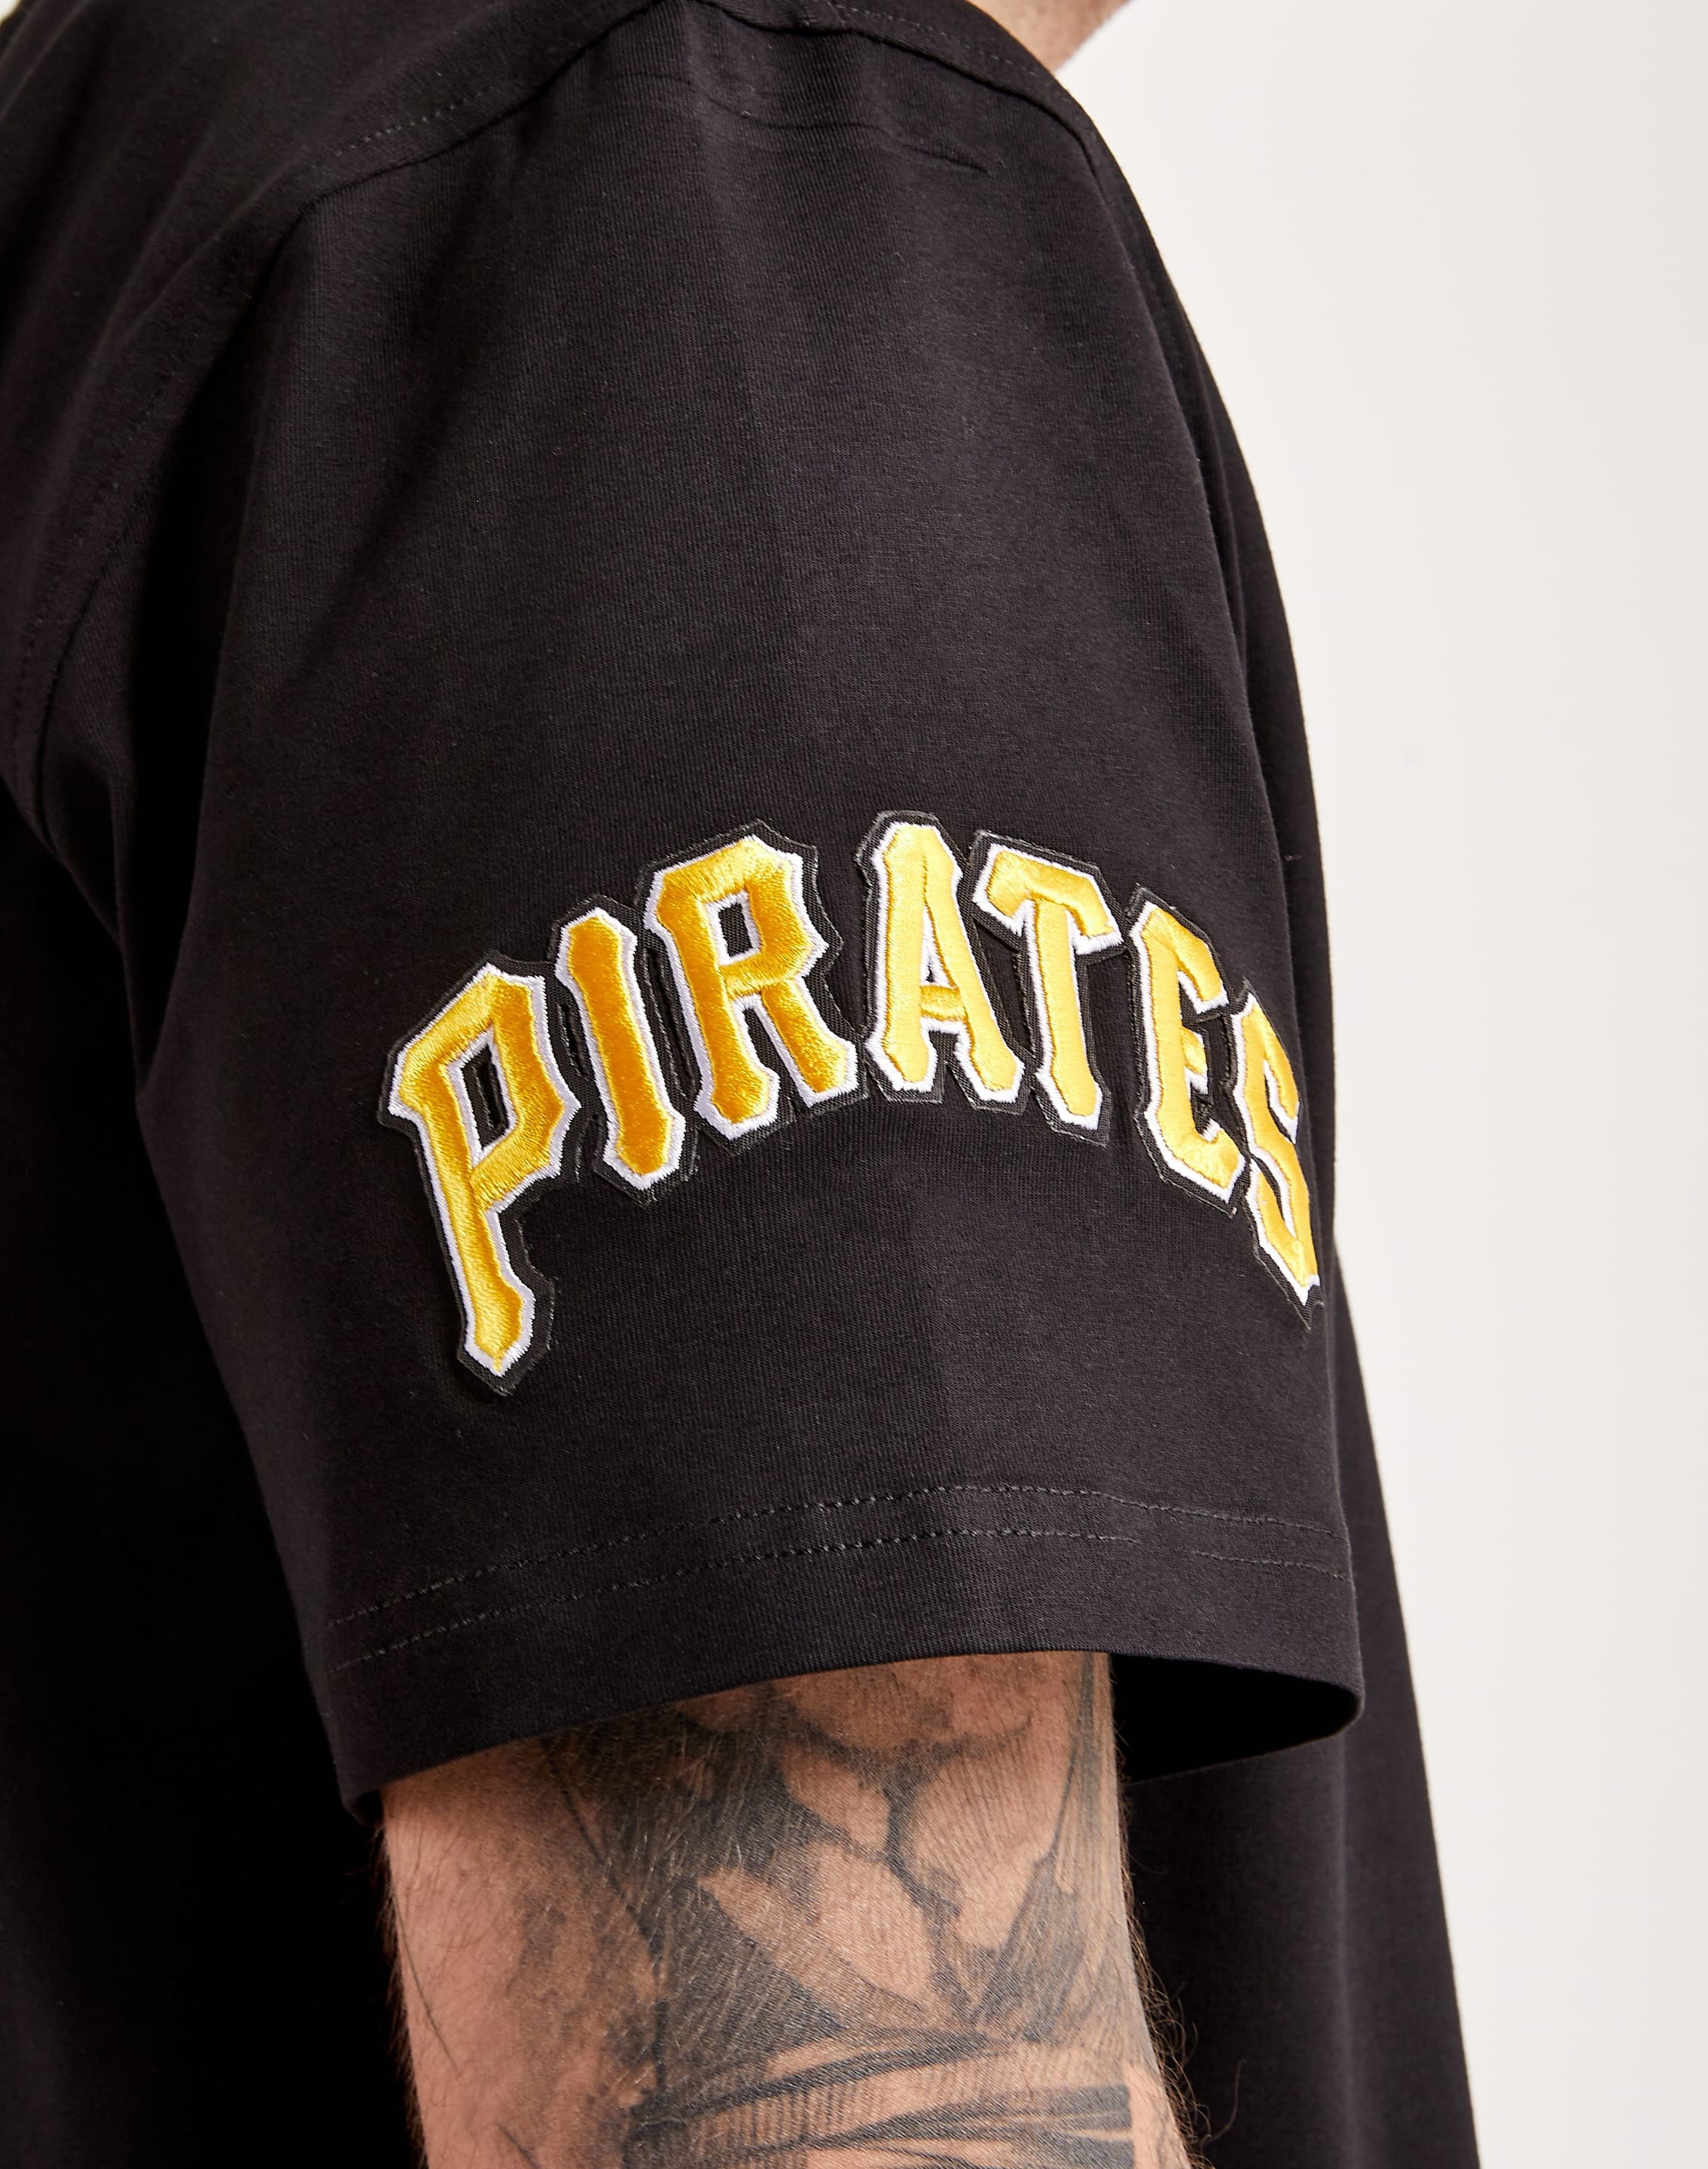 Pro Standard Men's Black Pittsburgh Pirates Team T-shirt